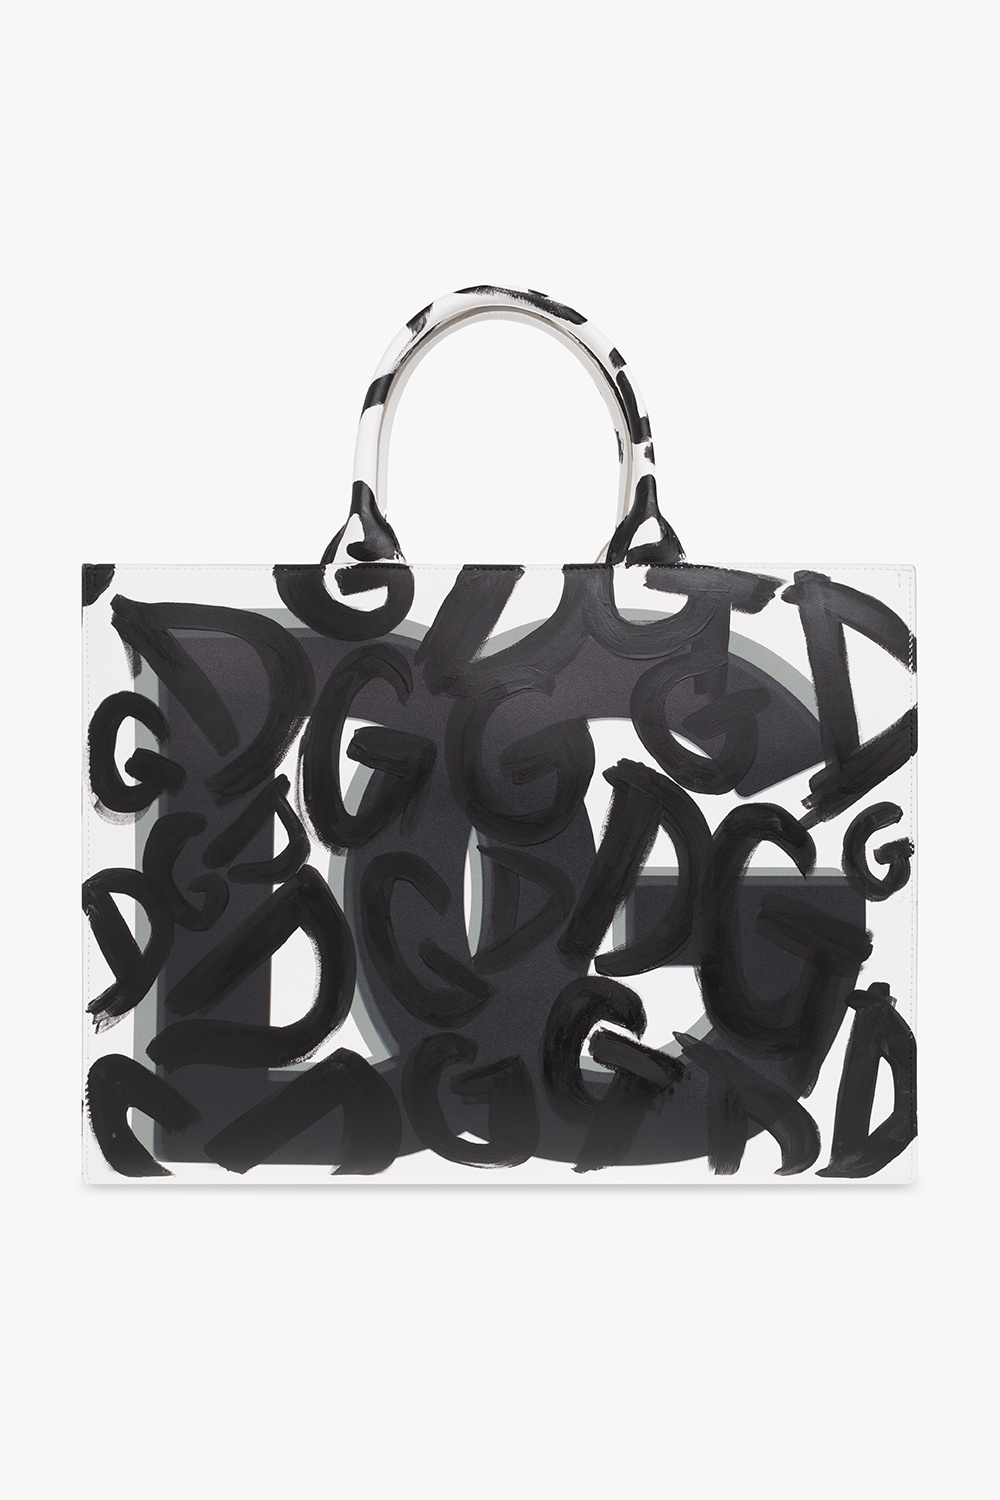 Dolce & Gabbana ‘DG Daily Large’ rubber bag